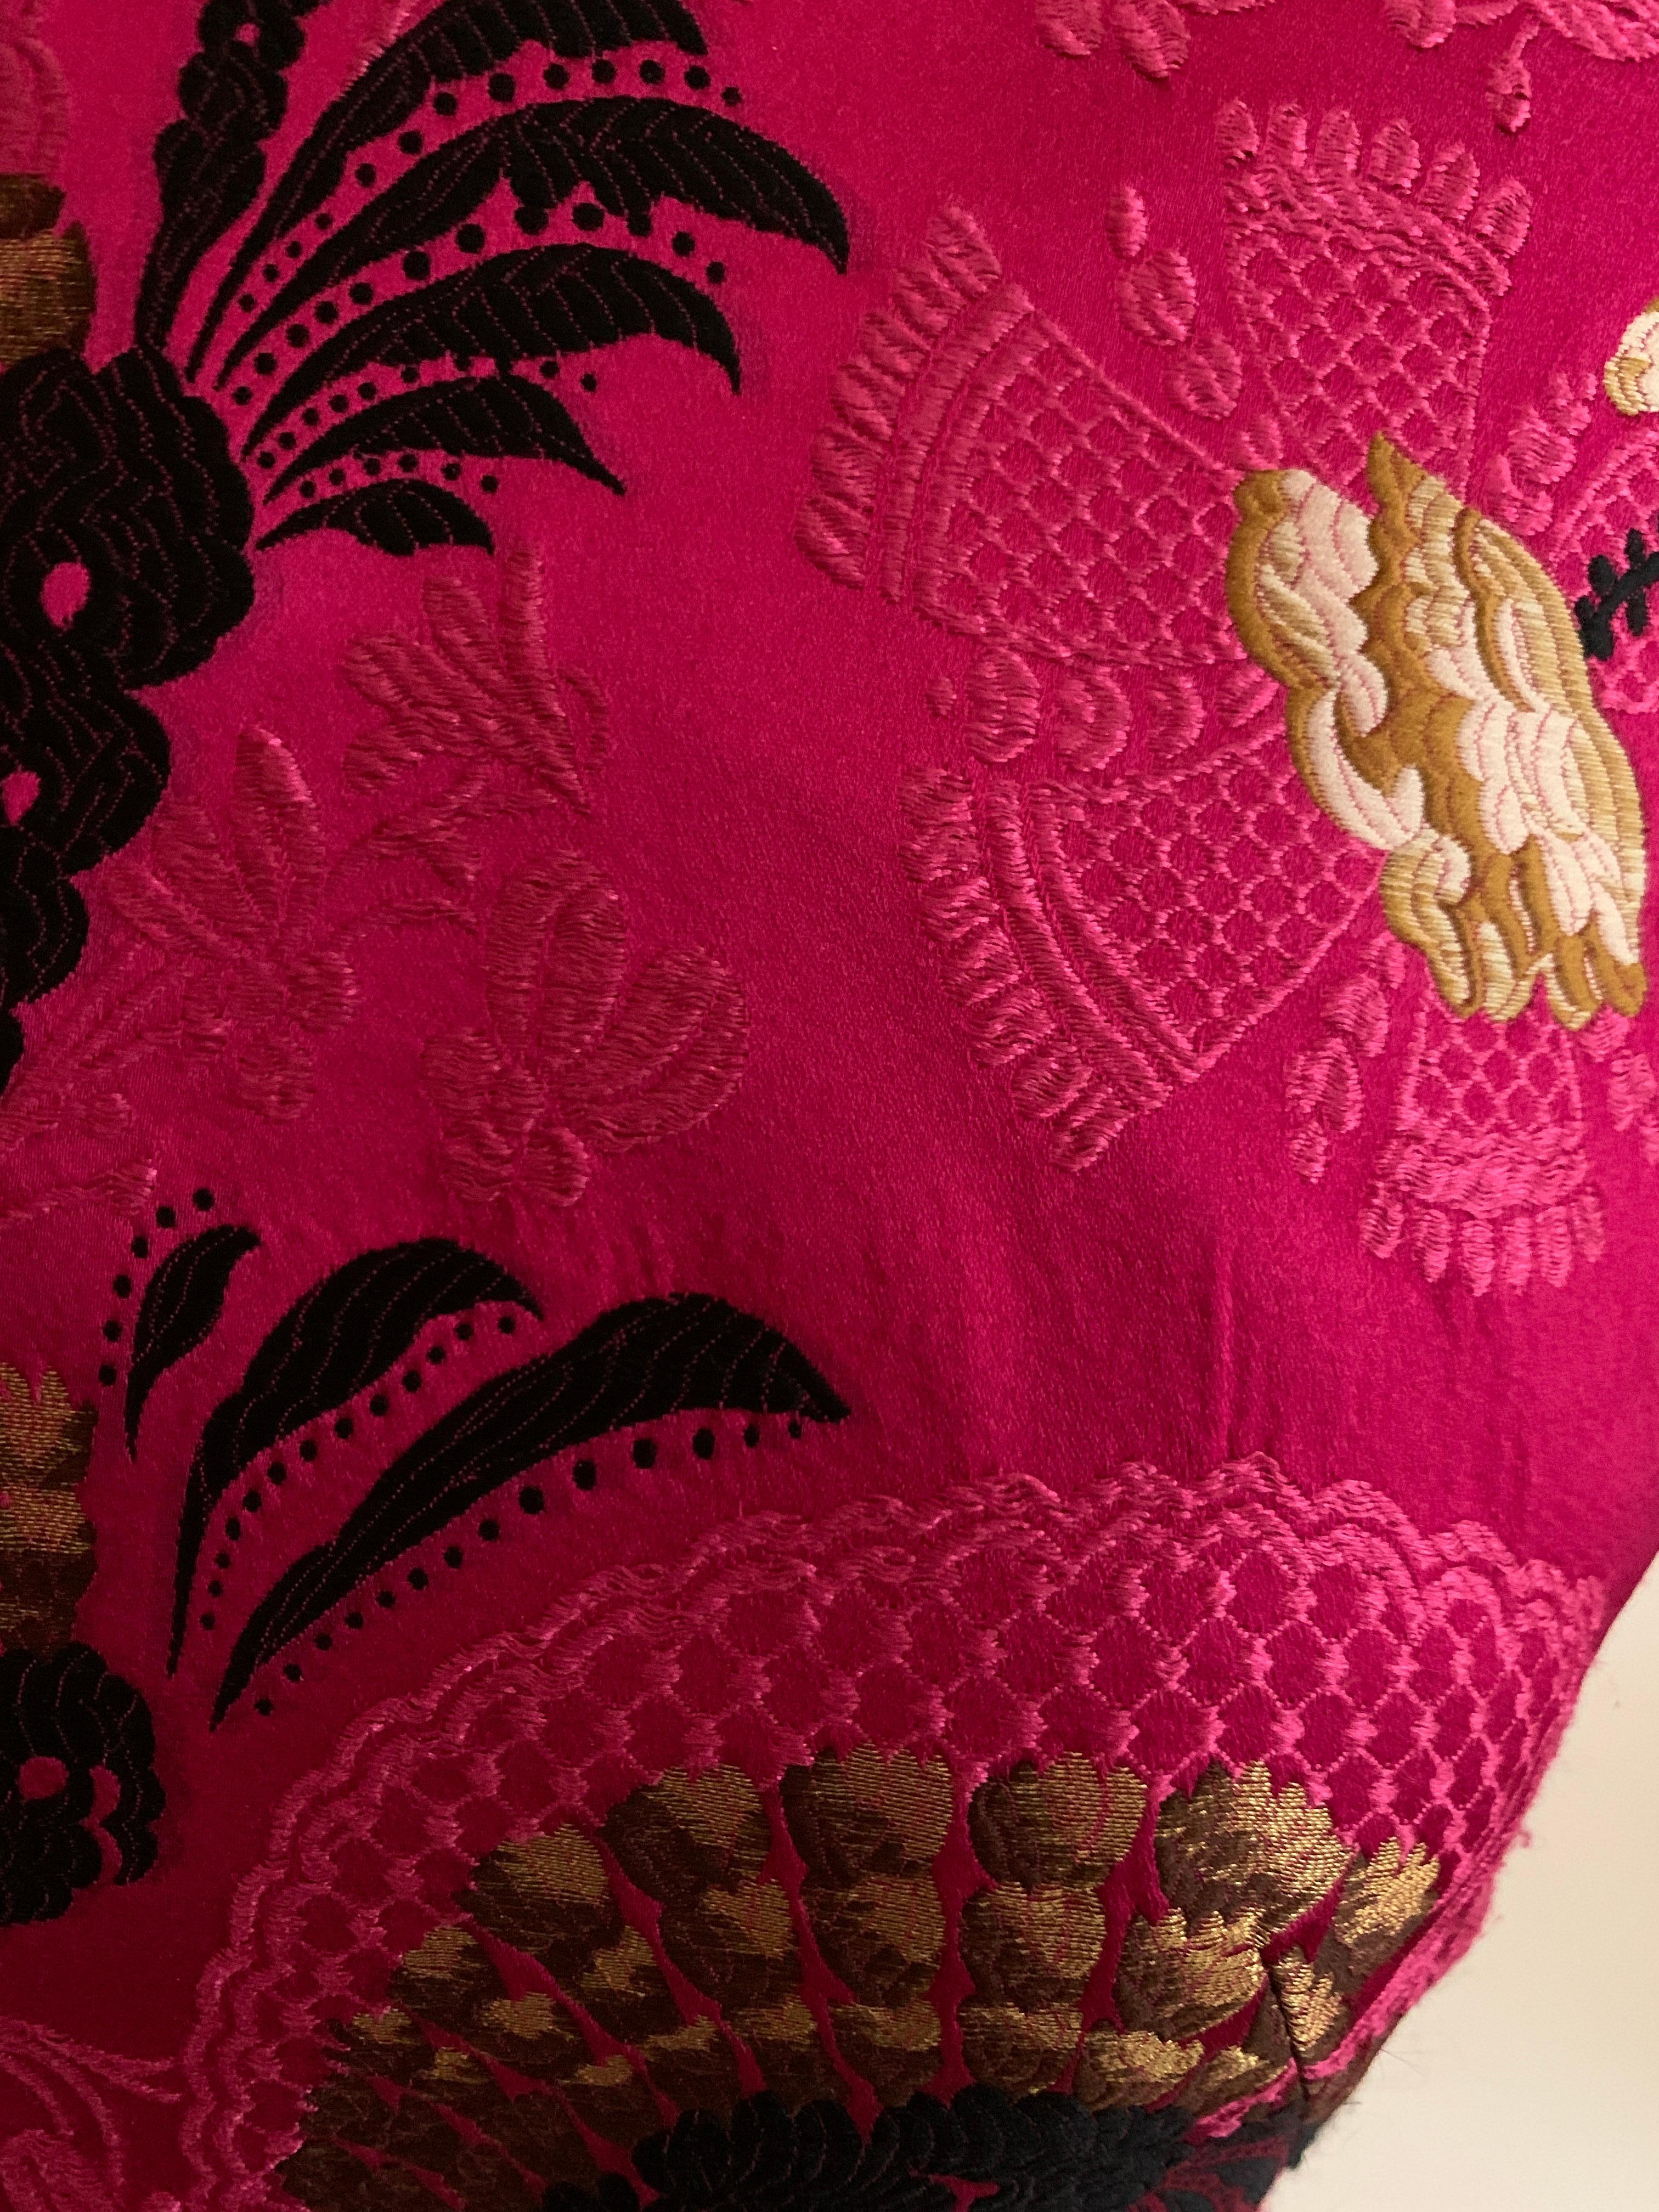 Alexander Mcqueen Brocade Dress in Magenta Pink, Black and Gold Floral Print 1